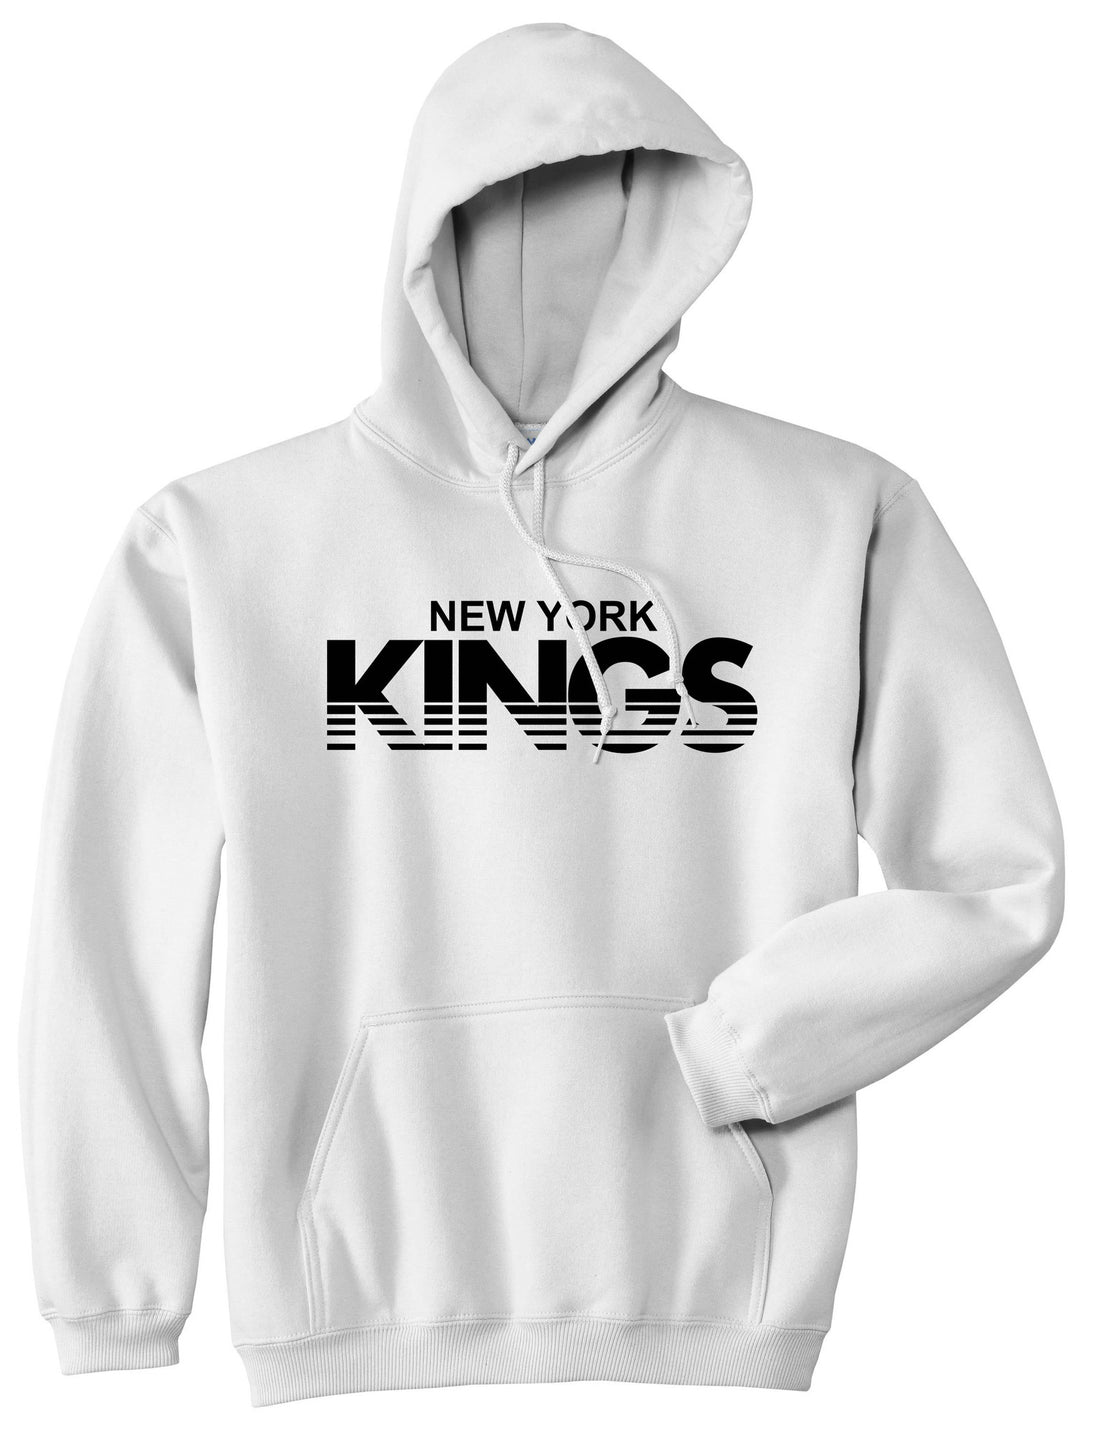 New York Kings Racing Style Pullover Hoodie Hoody in White by Kings Of NY